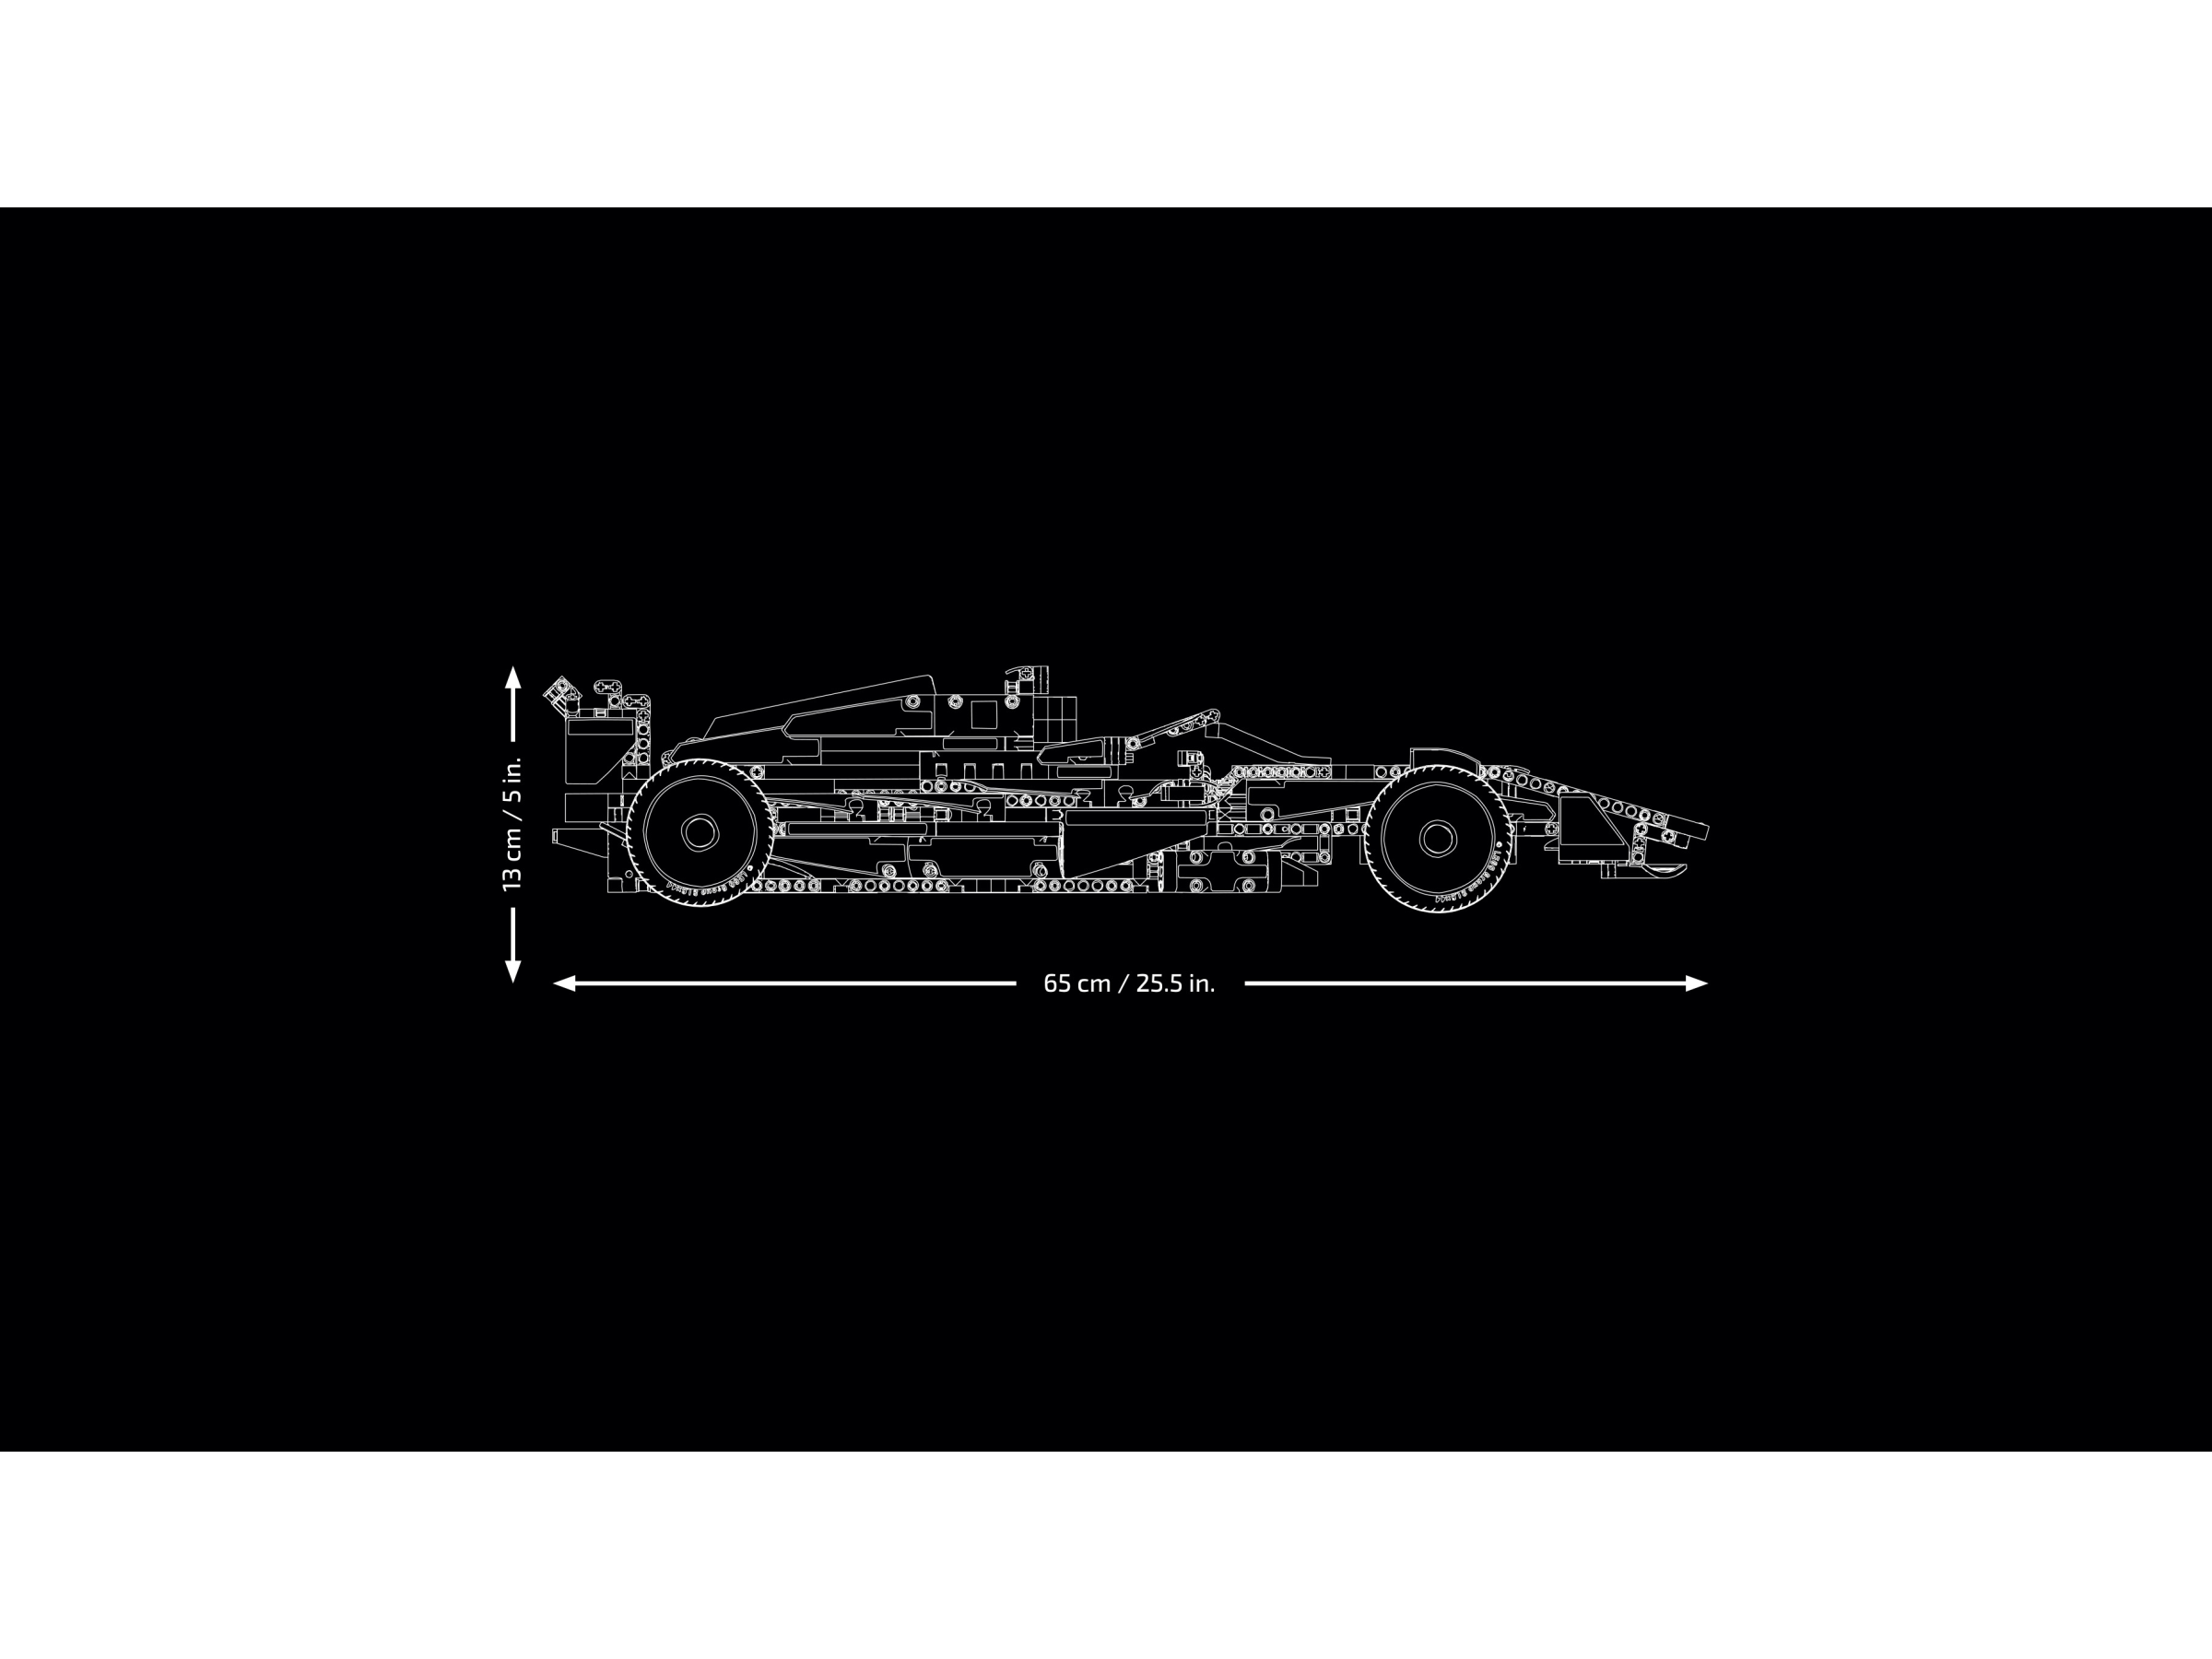 McLaren Formula 1™ Race Car 42141 | Technic™ | Buy online at the